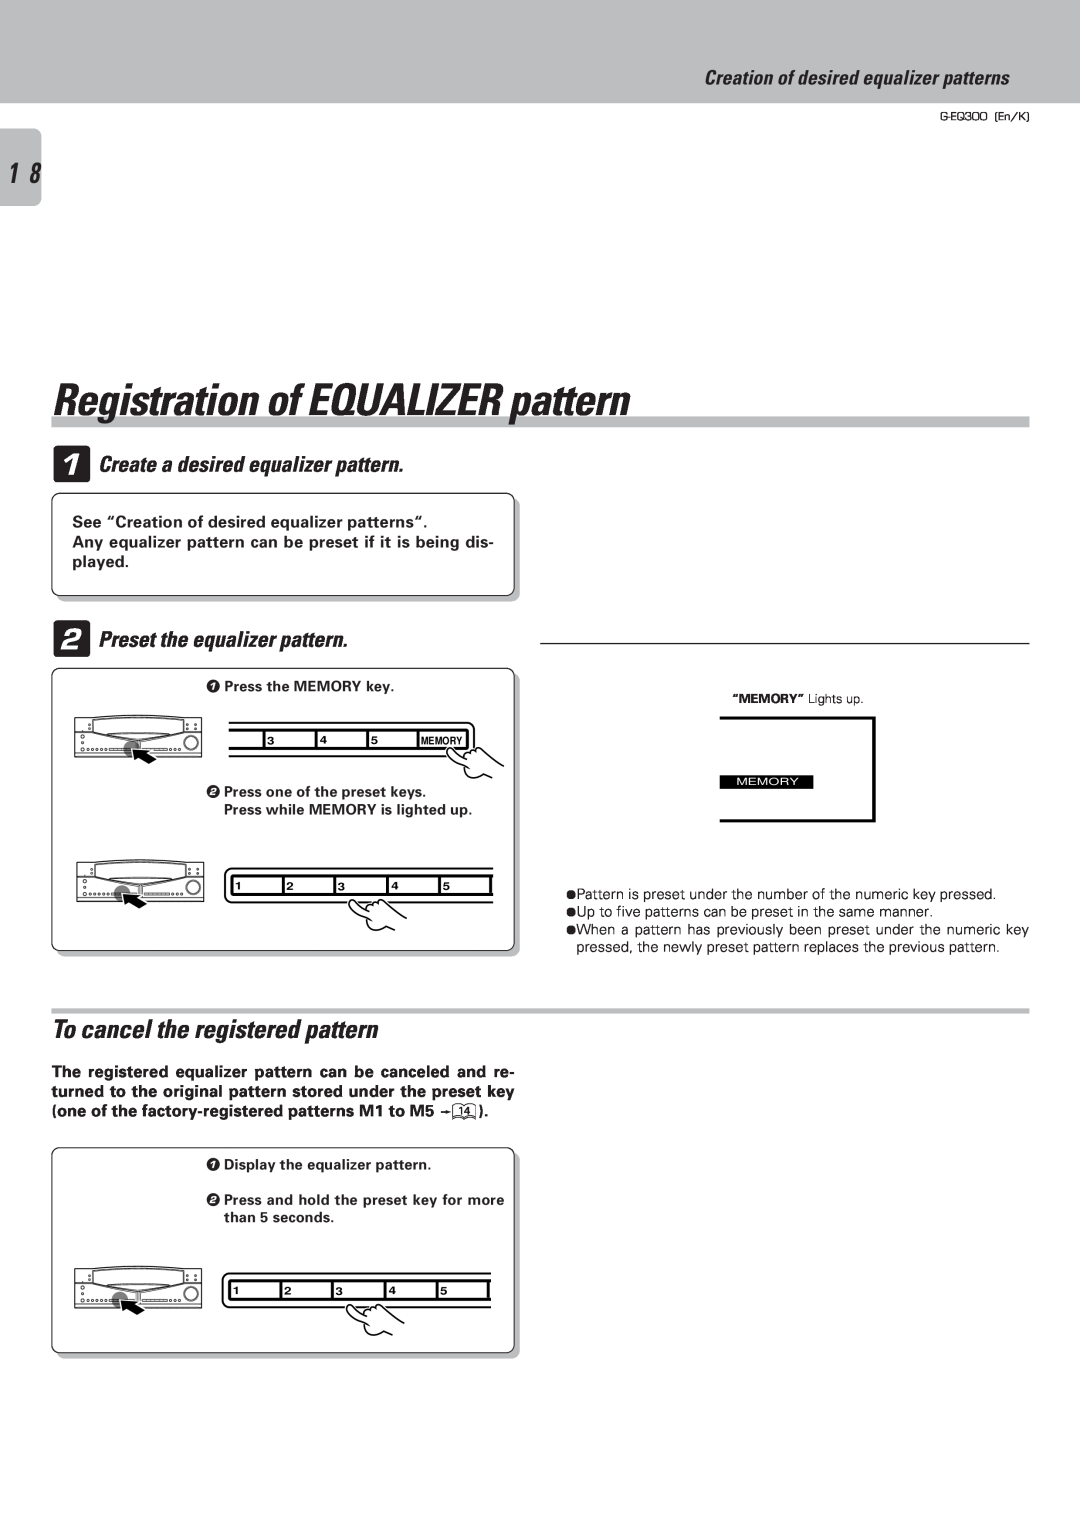 Kenwood G-EQ300 Registration of EQUALIZER pattern, To cancel the registered pattern, Create a desired equalizer pattern 